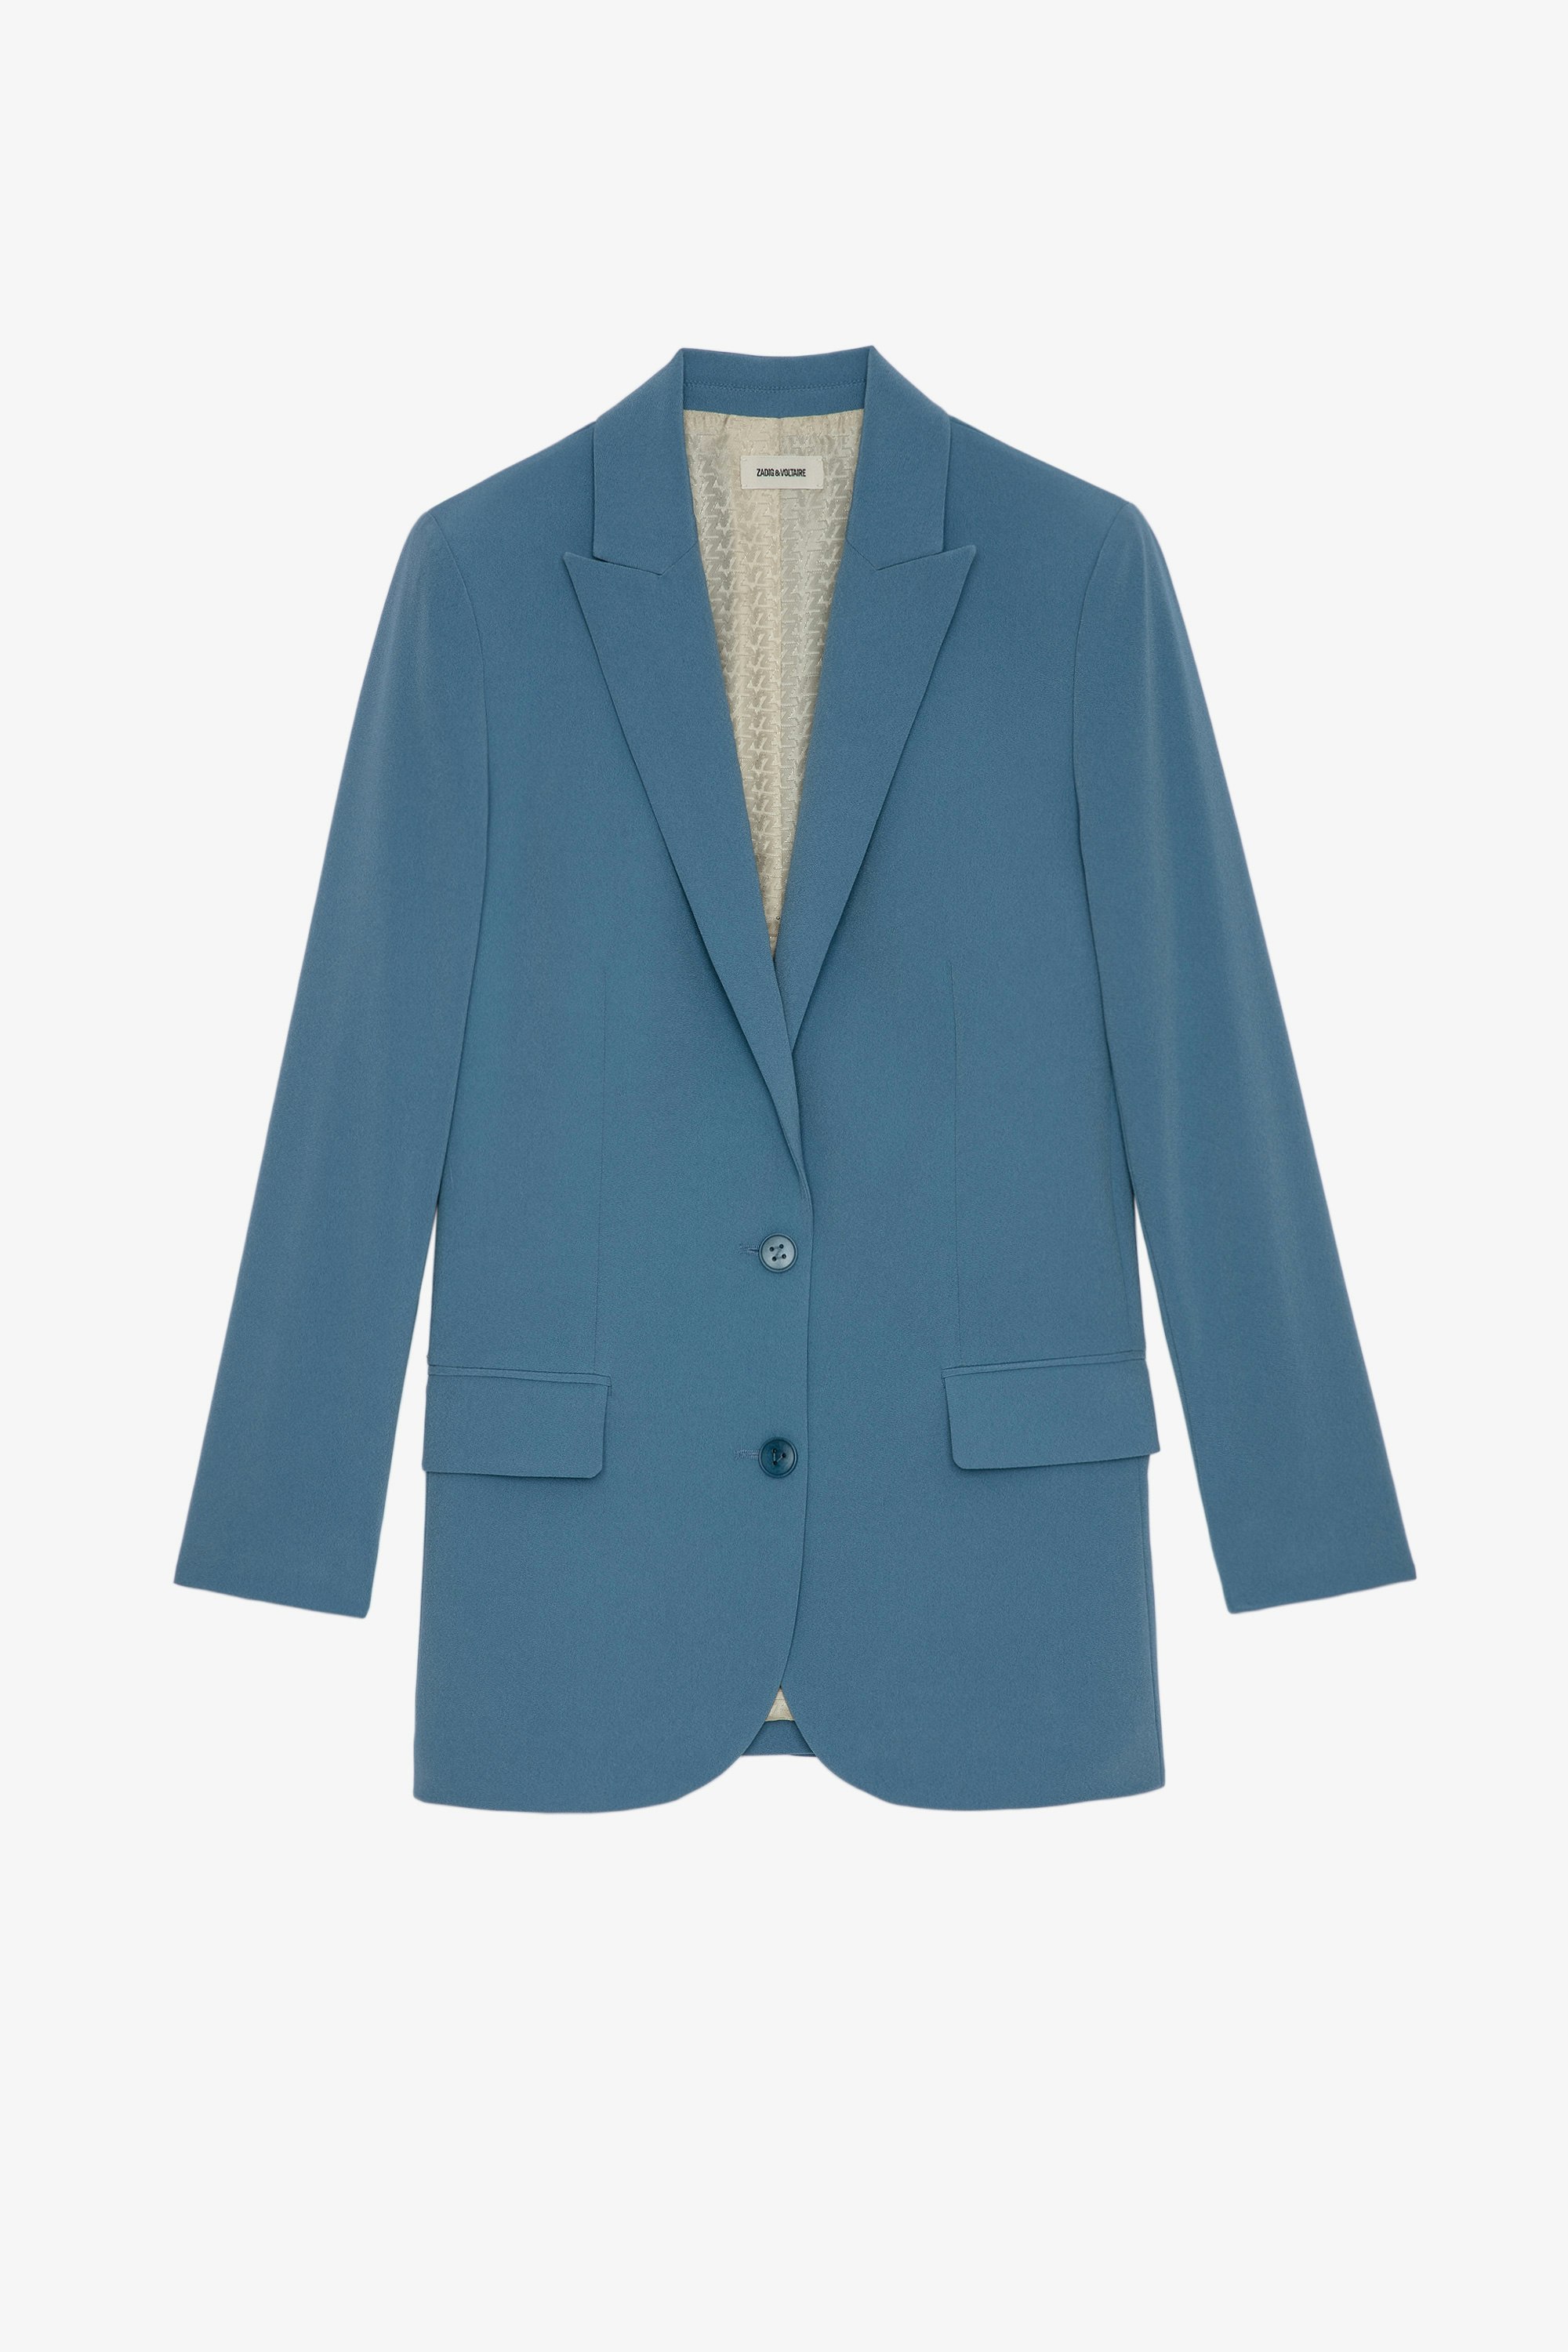 Viva Crepe Jacket Women’s sky blue crepe jacket 